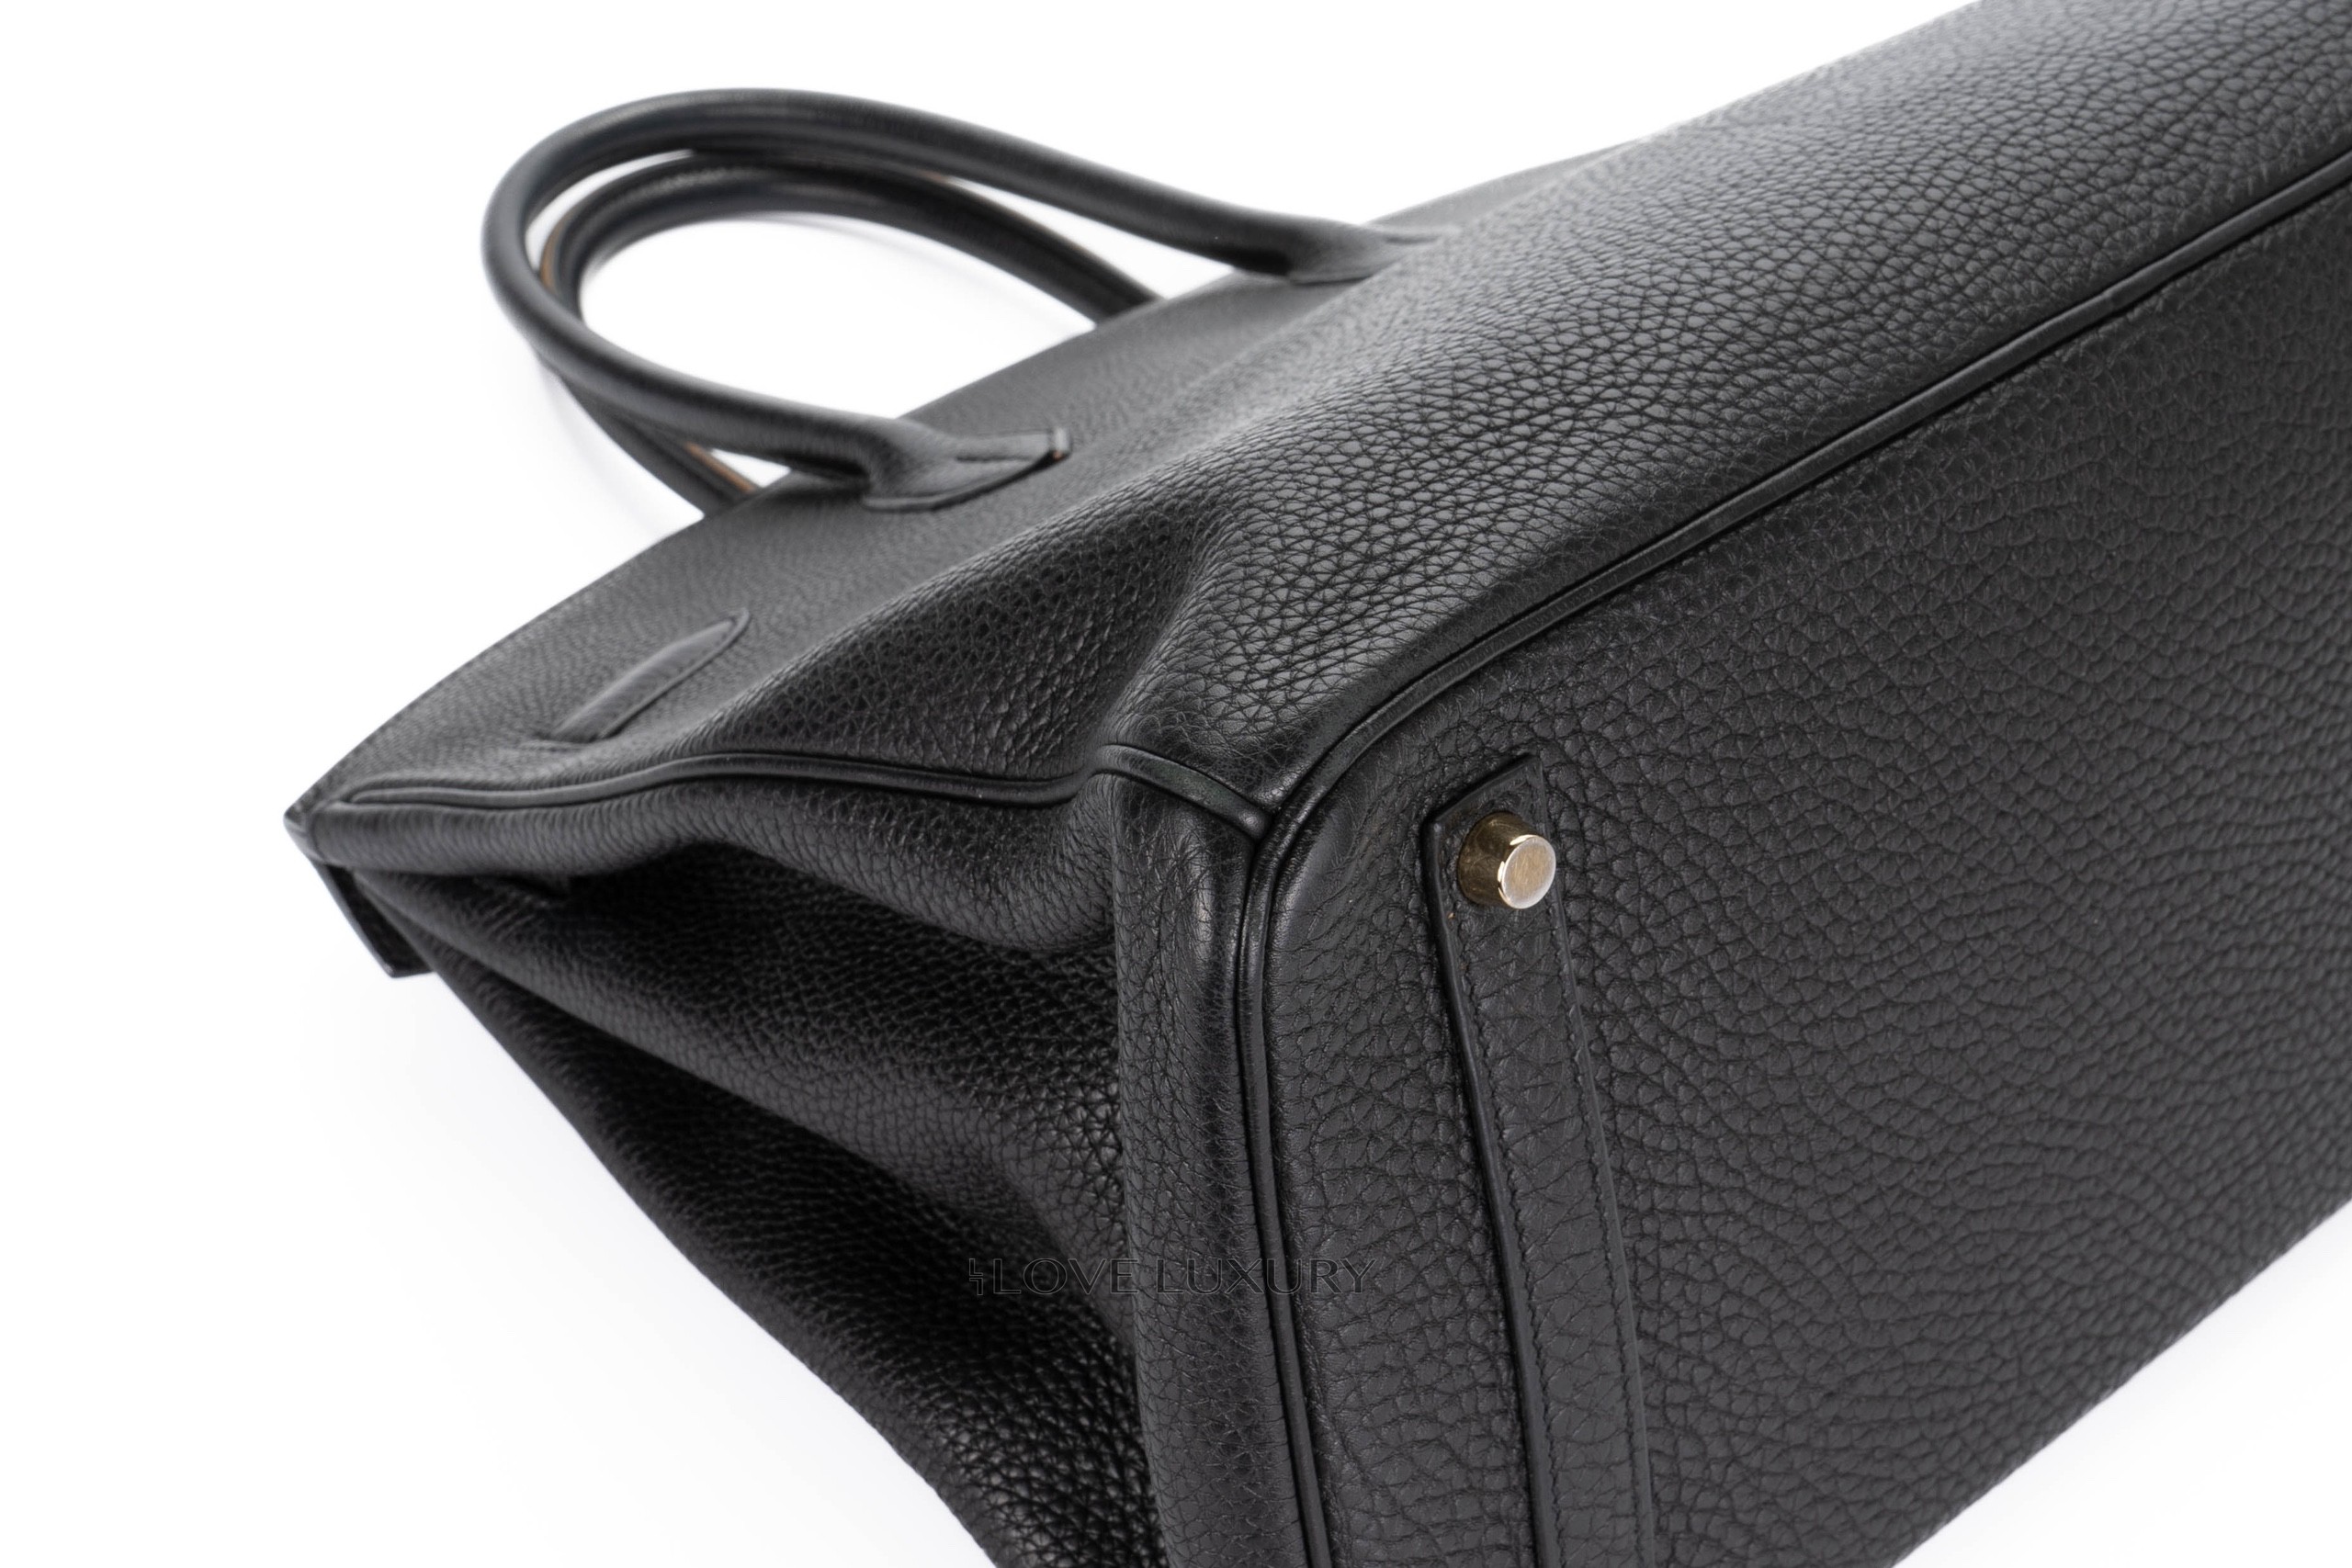 Hermès Black Togo Birkin 35cm Gold Hardware, Hermès Handbags Online, Jewellery